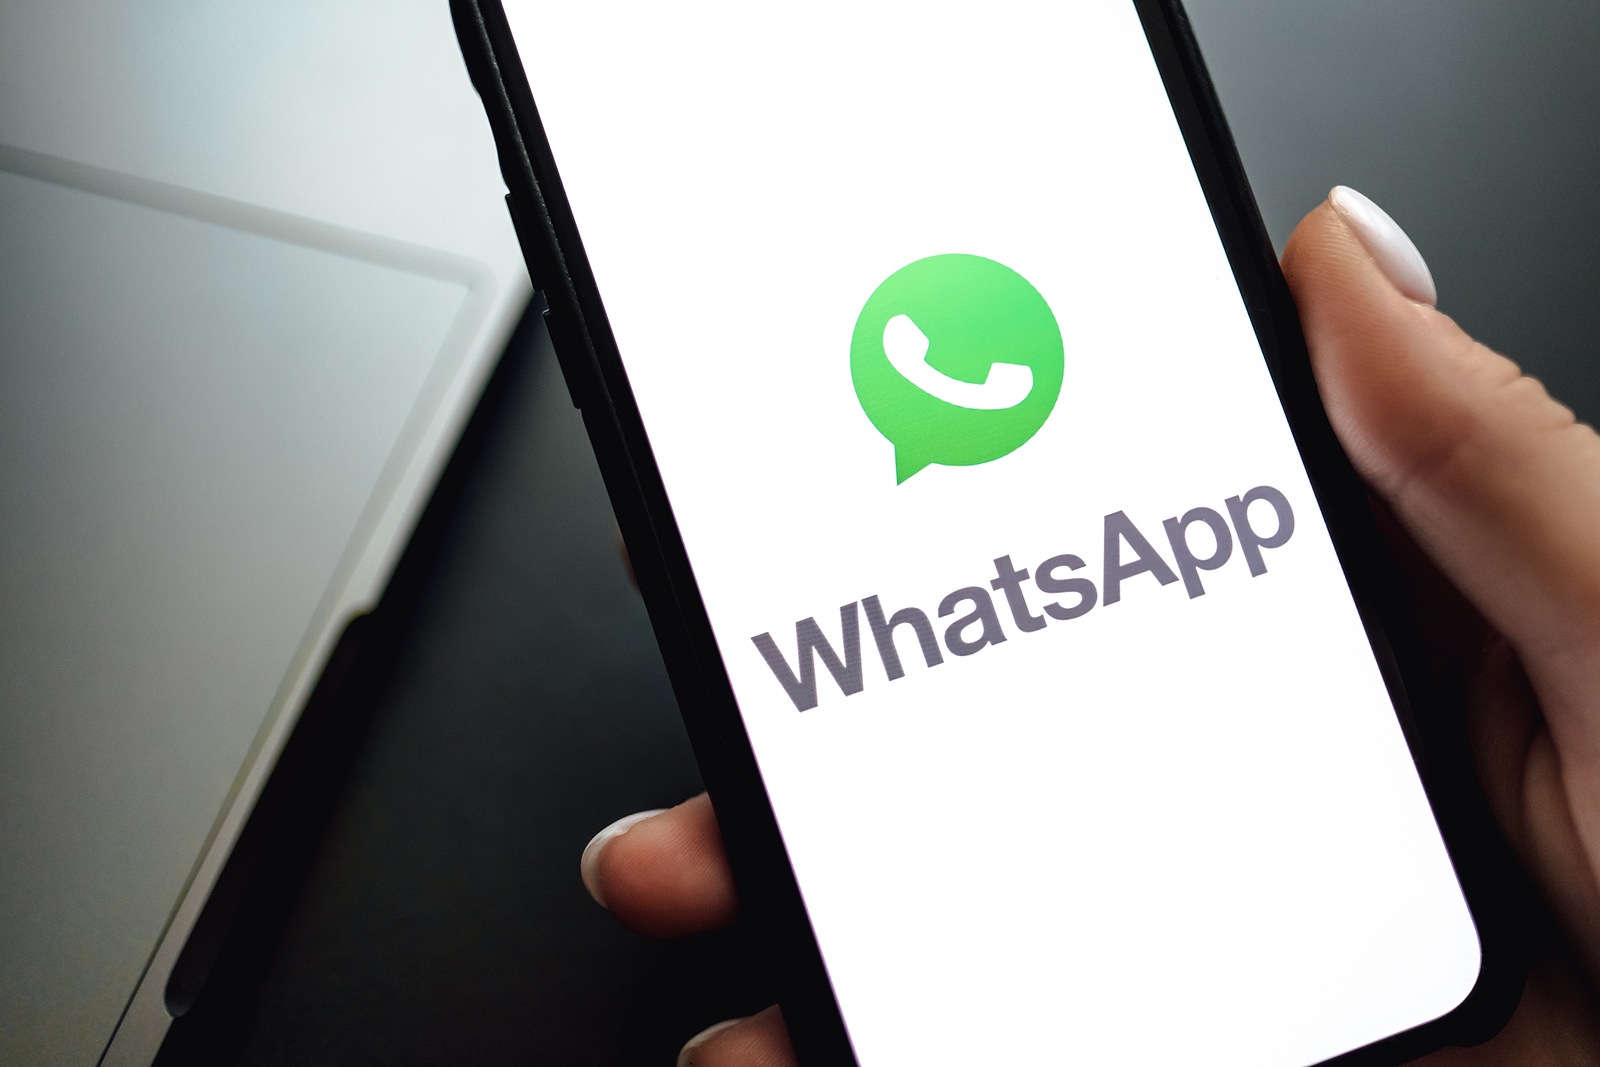 ipad whatsapp app